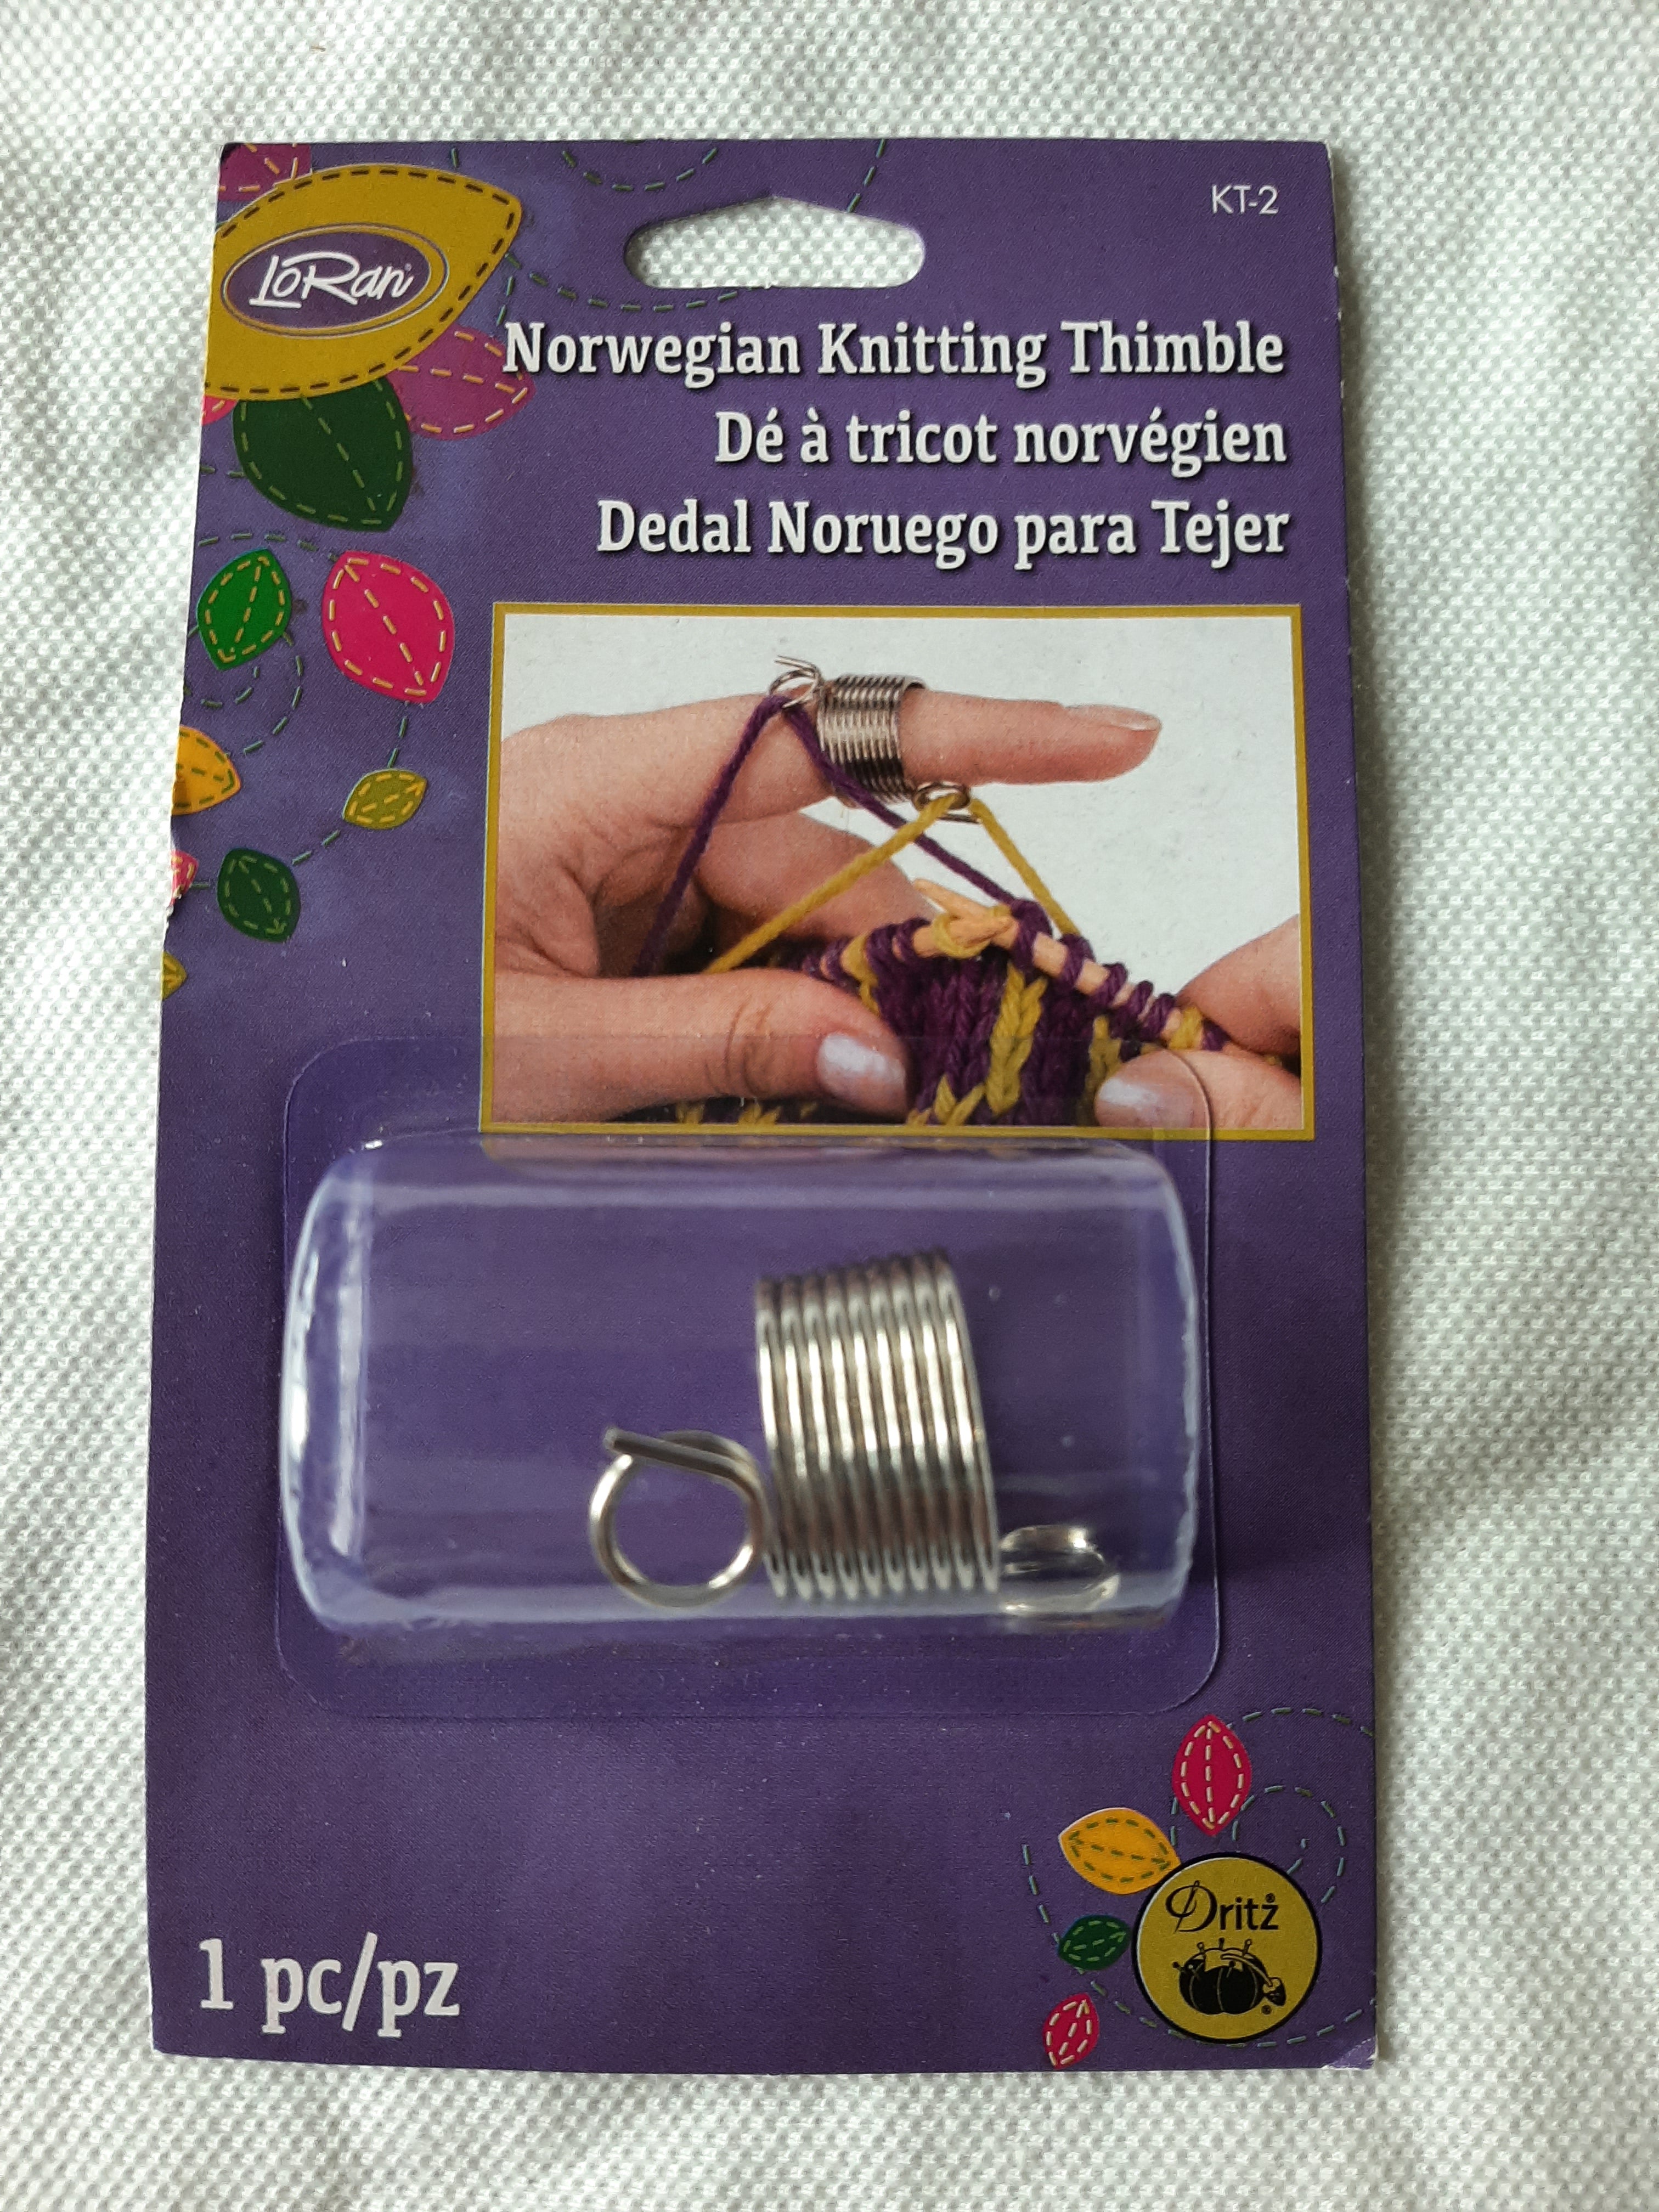 LoRan/Dritz Thimble Knitting Norwegian